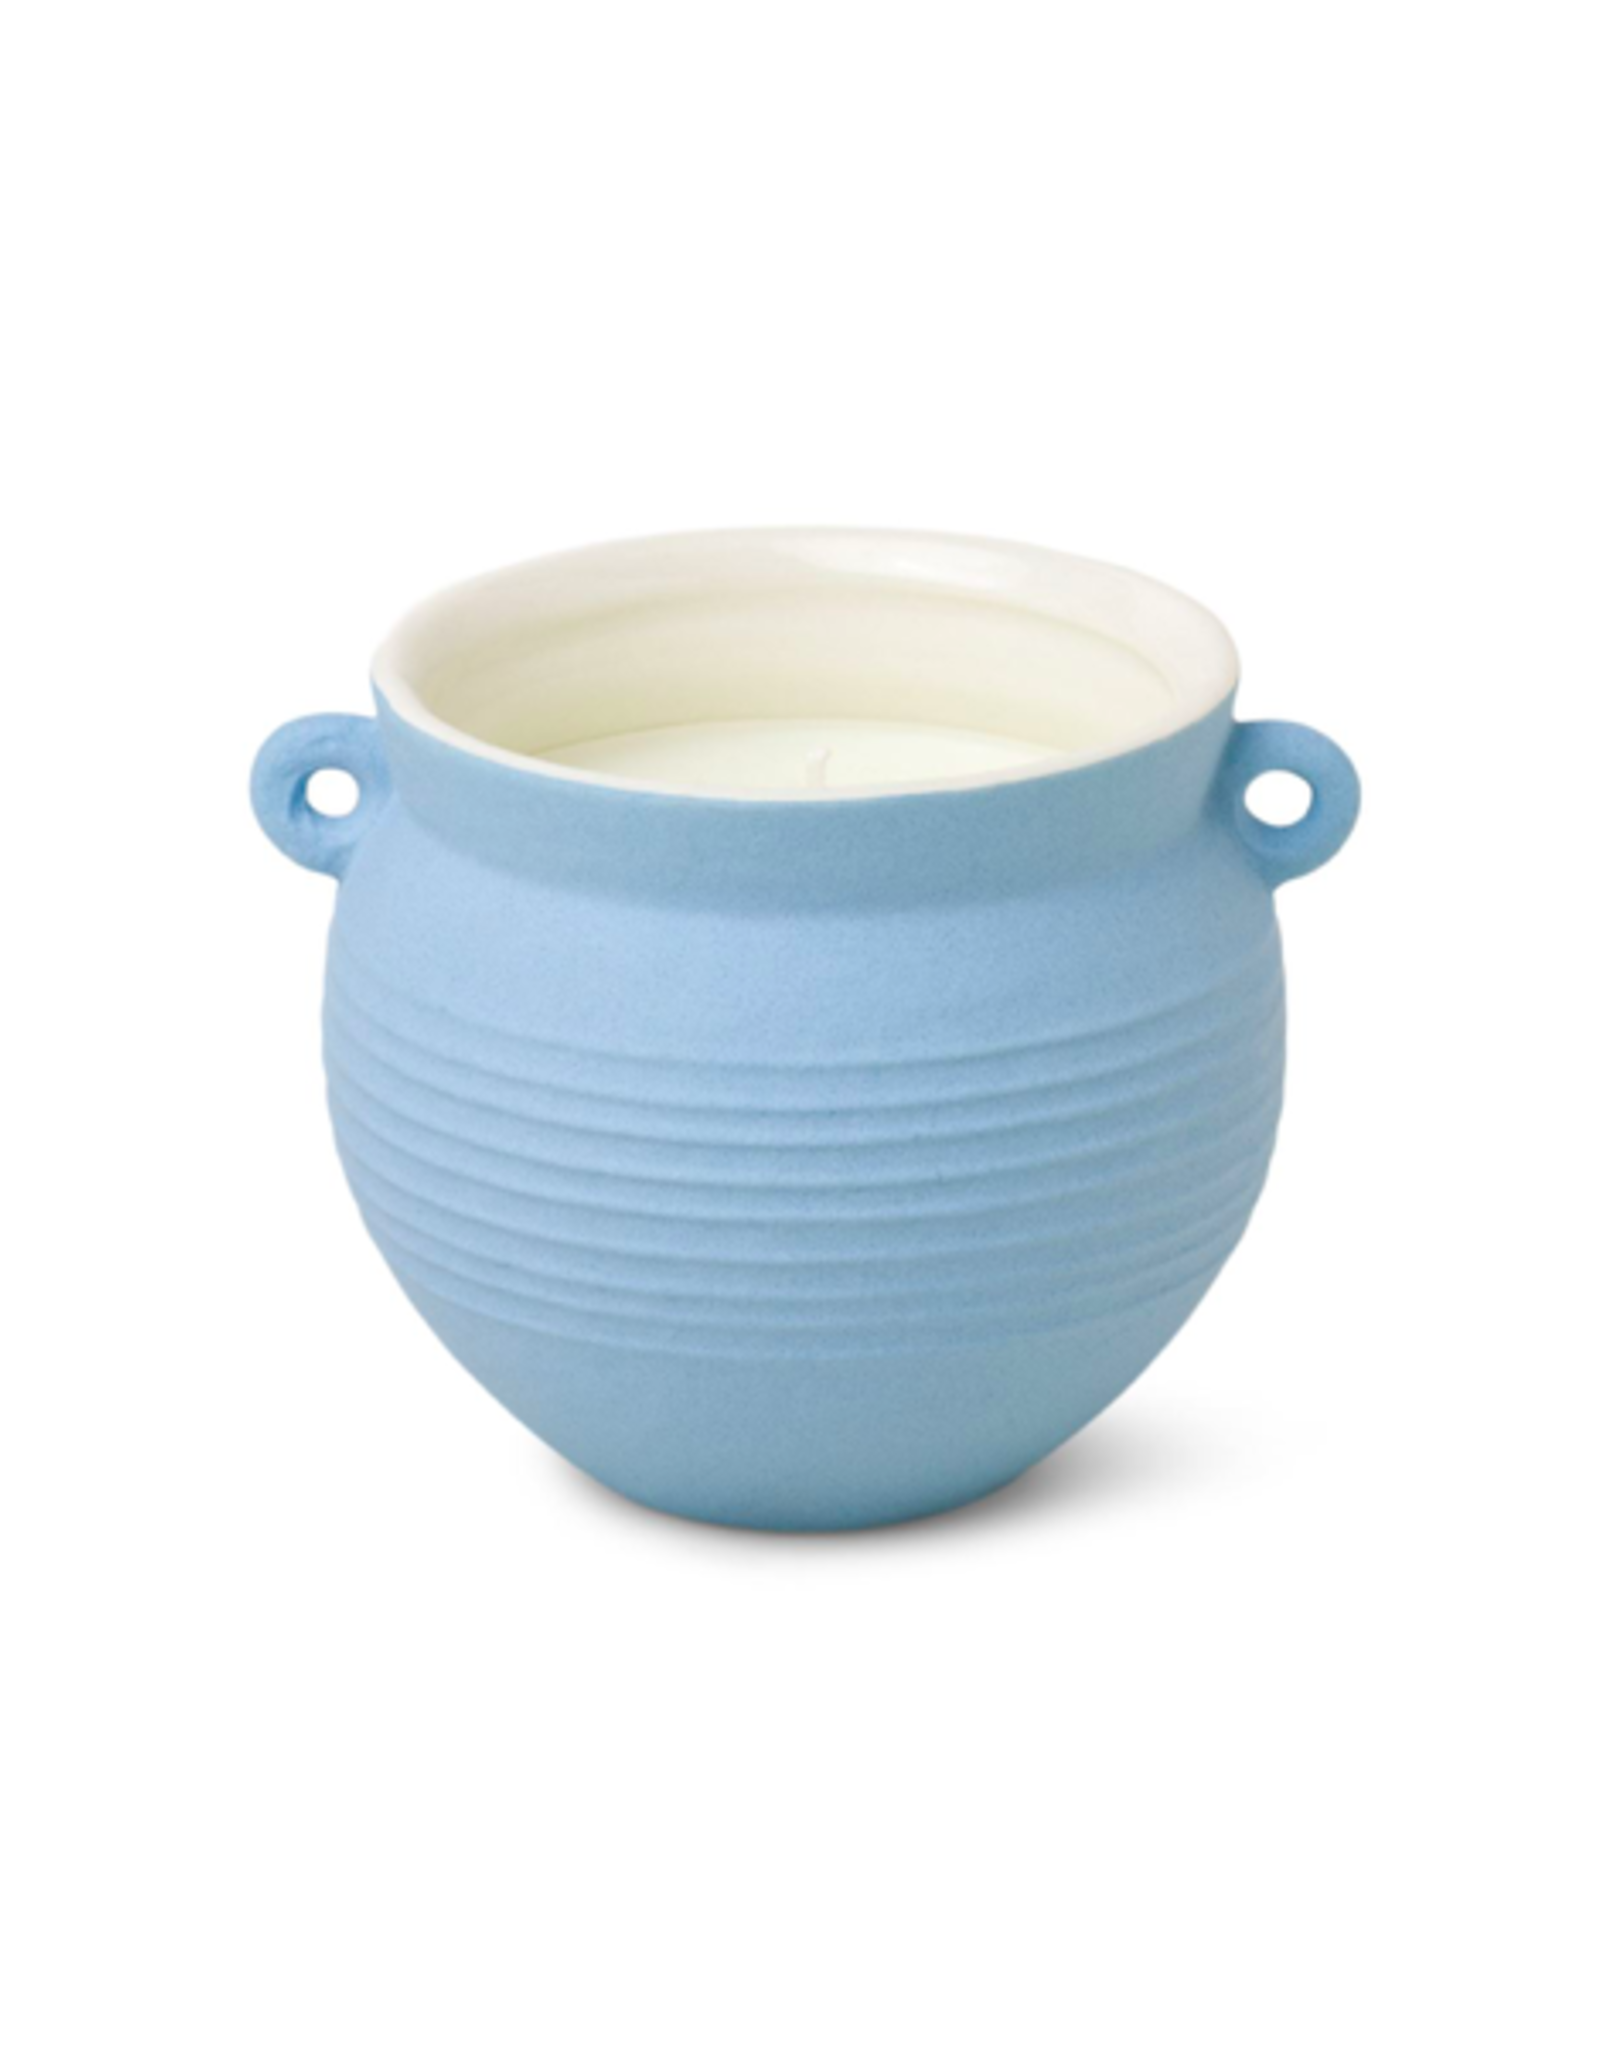 PAX - Soy Candle / Rosemary & Sea Salt, Blue Pot, 8.5oz